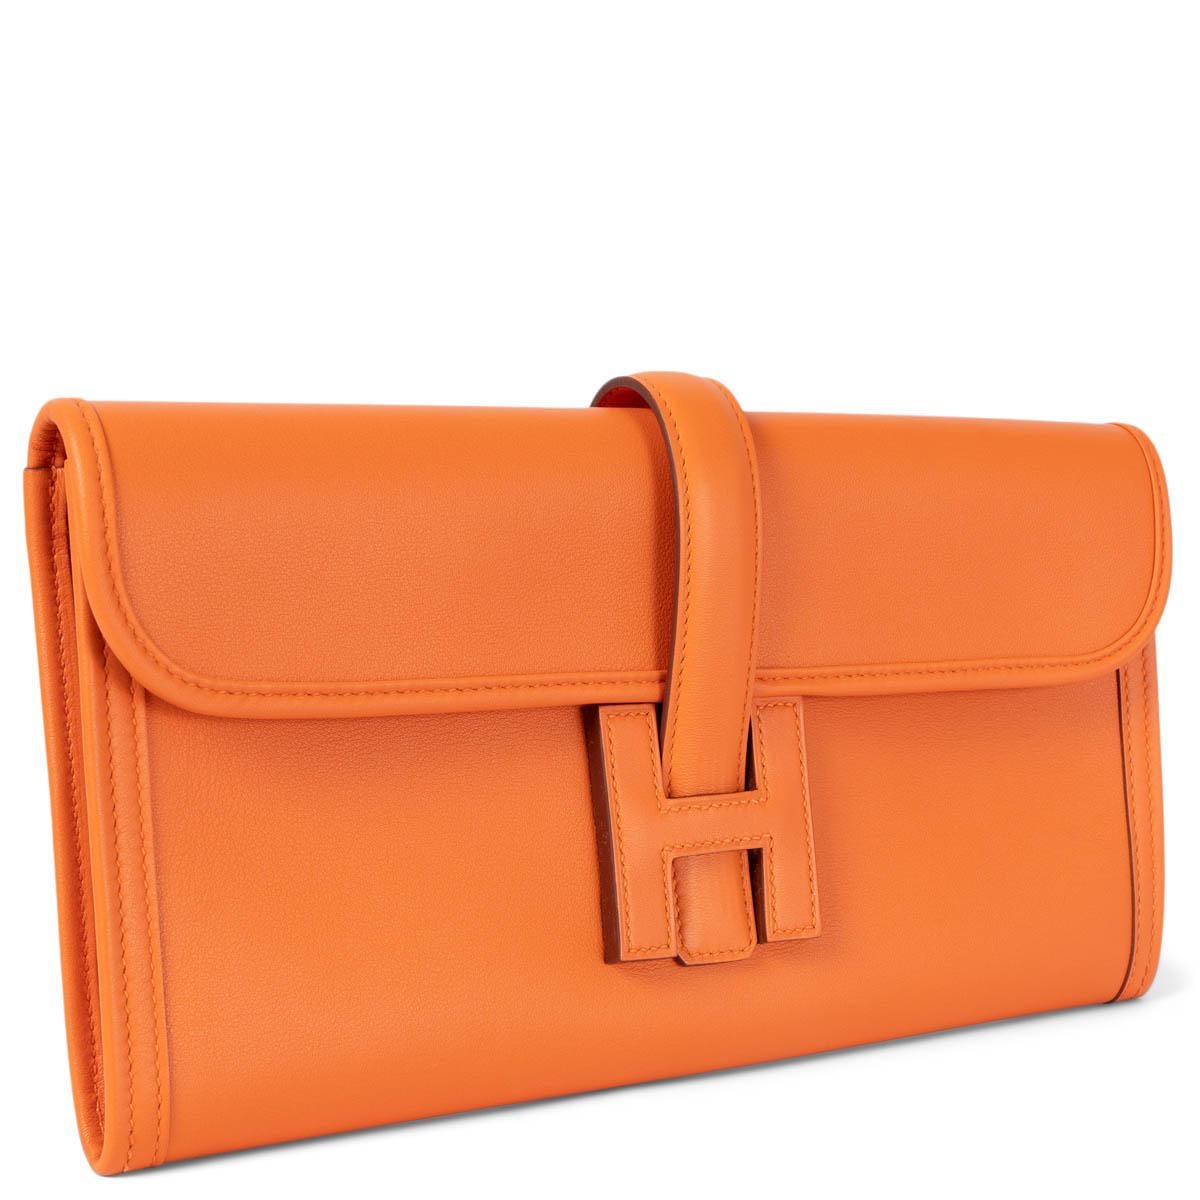 100% authentic Hermès Jige Elan 29 clutch in orange Veau Swift leather. Features a flap with strap that tucks under a leather Hermès 